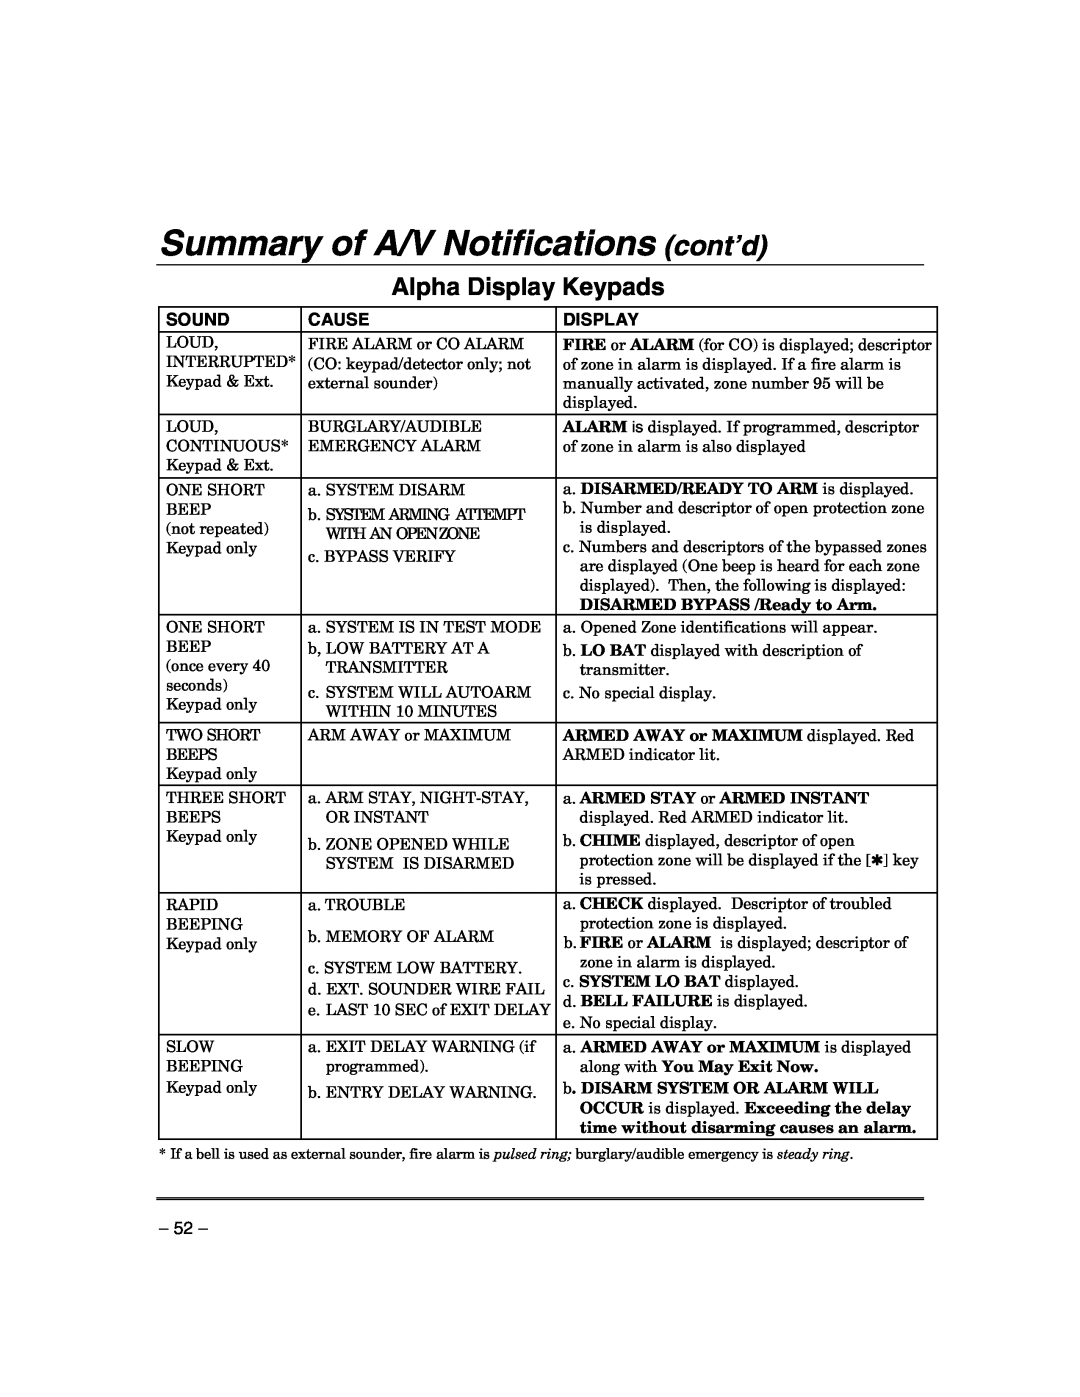 Honeywell VISTA-21IPSIA manual Summary of A/V Notifications cont’d, Alpha Display Keypads 